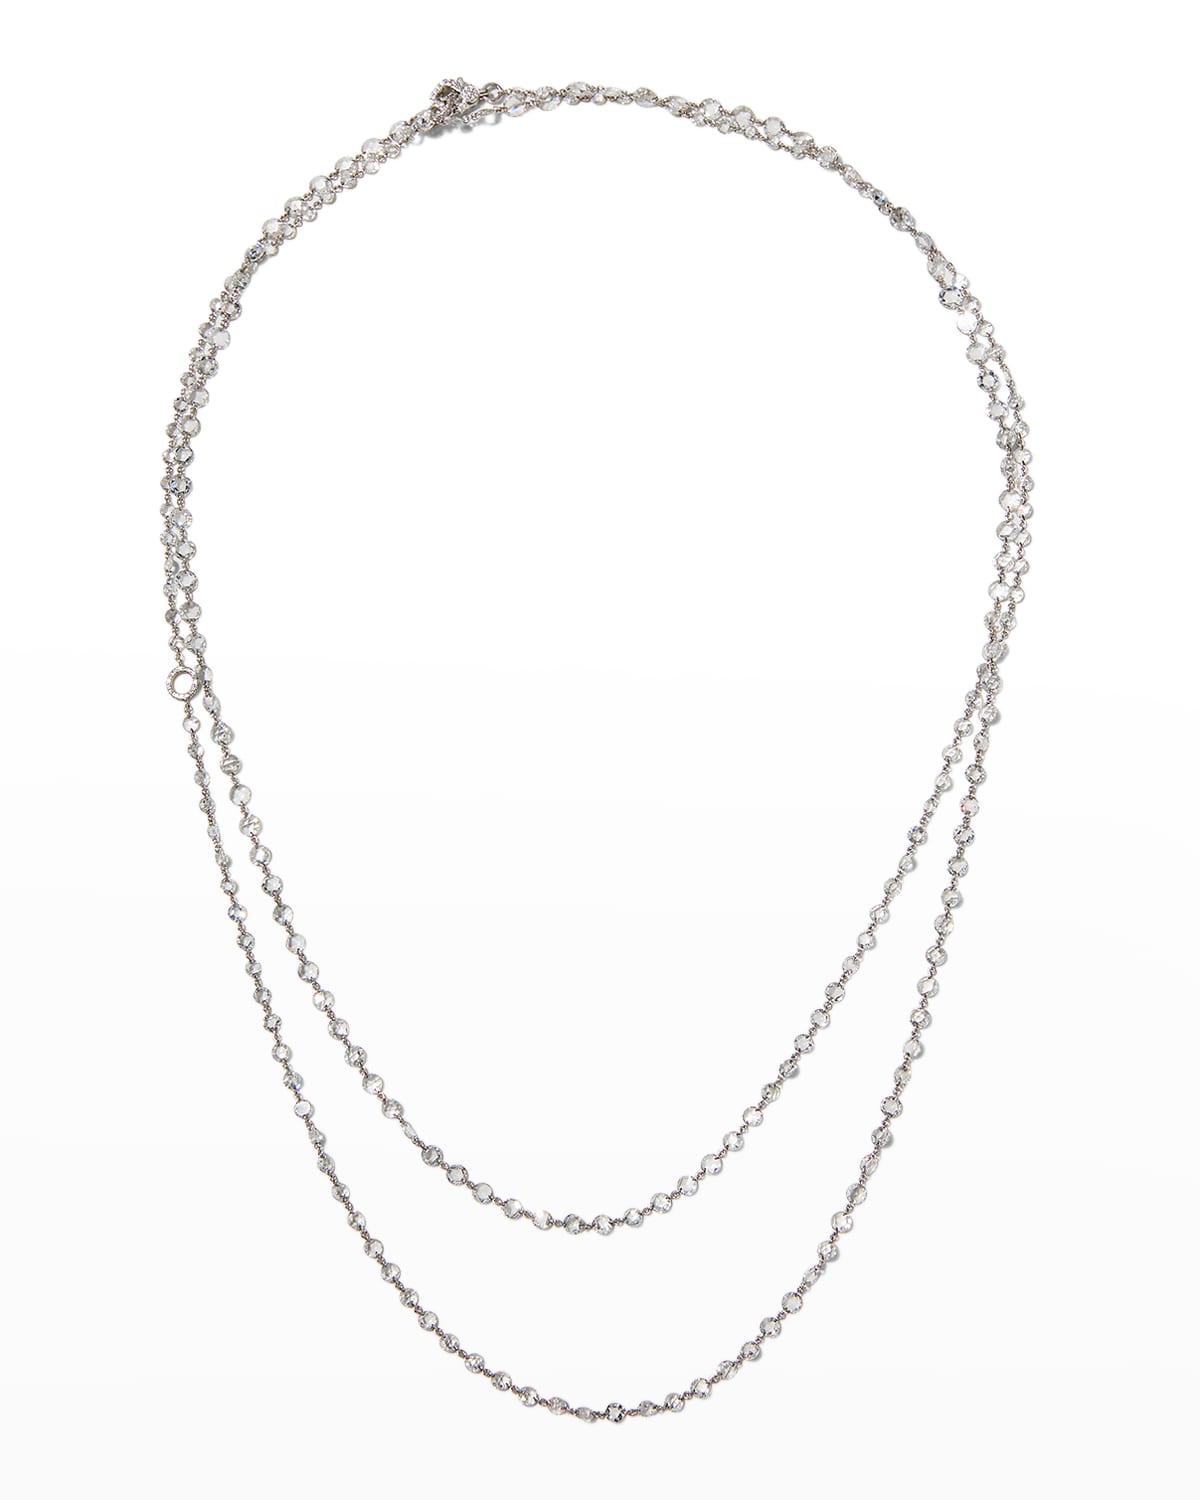 Platinum Diamond-Strand Necklace, 48"L